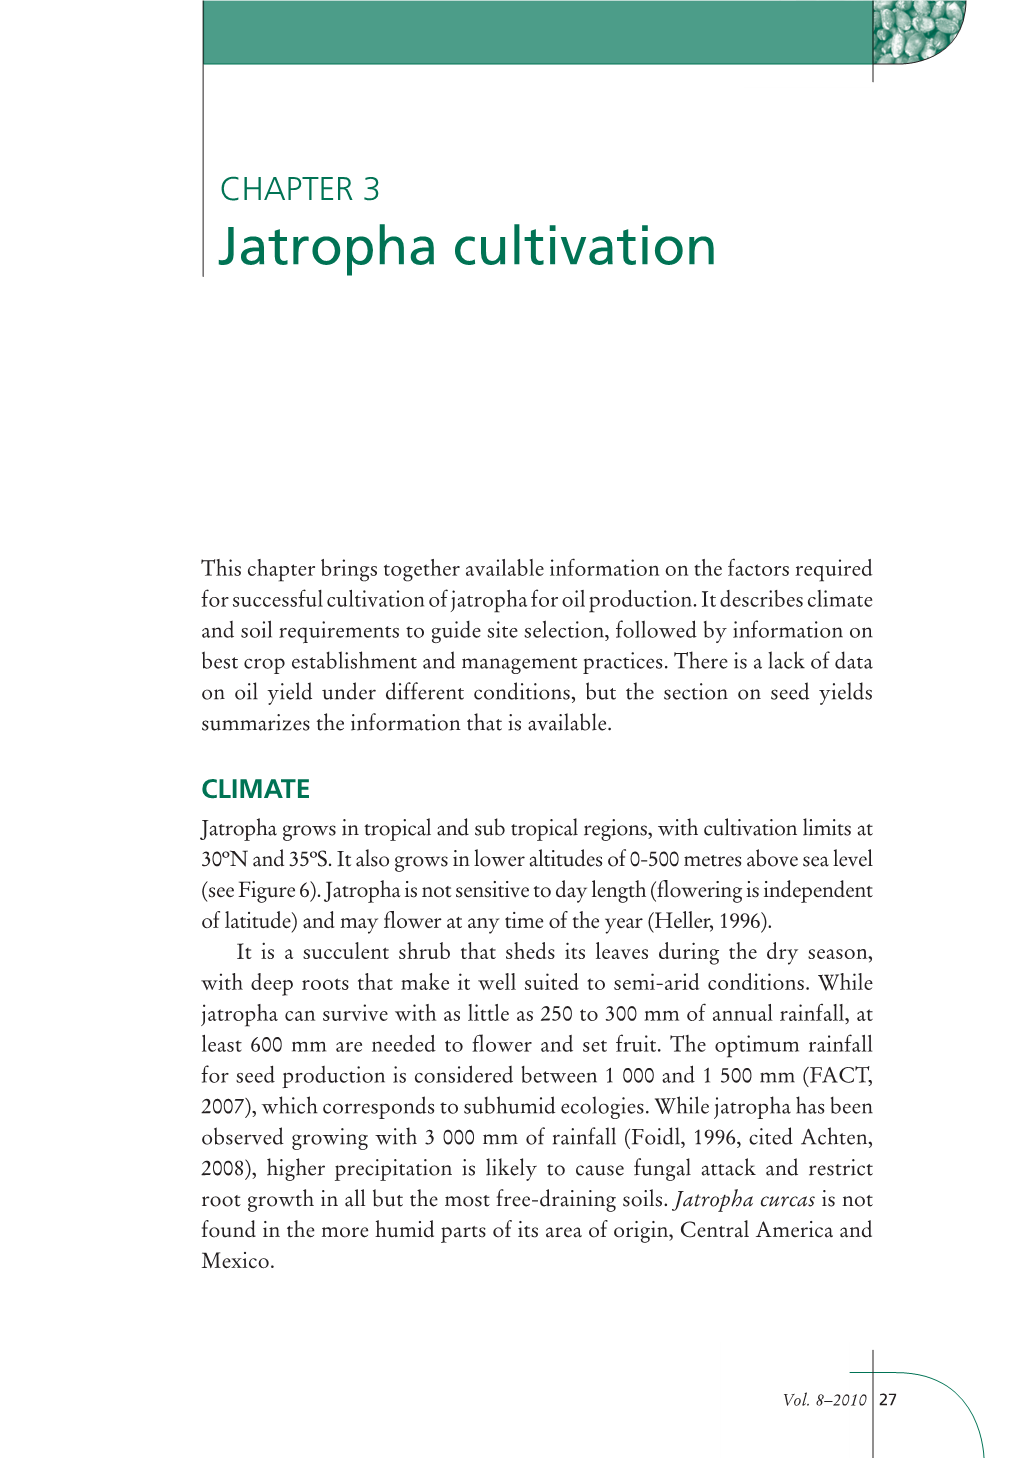 Jatropha Cultivation